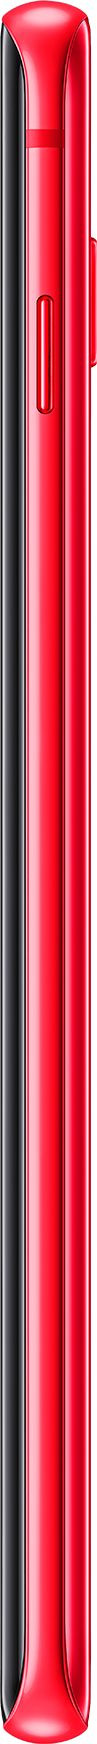 Samsung Galaxy S10 SM-G973F 8/128GB Red (SM-G973FZRDSEK) (UA UCRF)